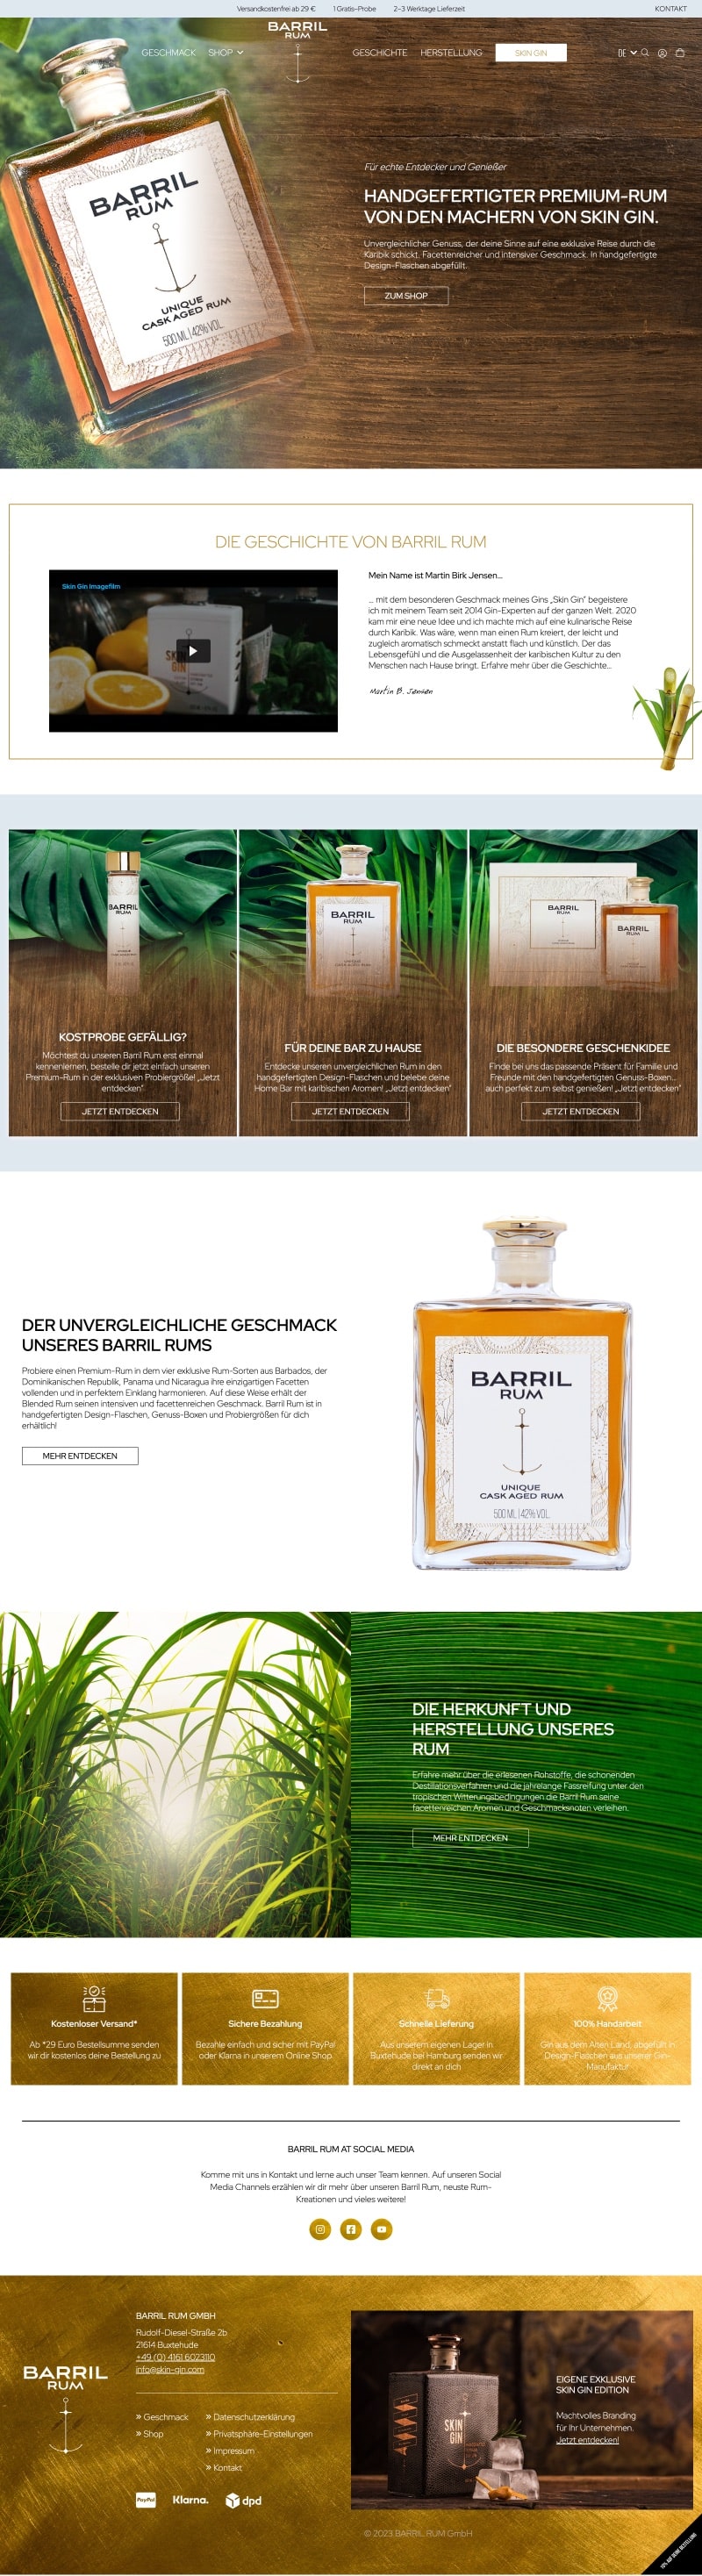 Barril-Rum Website